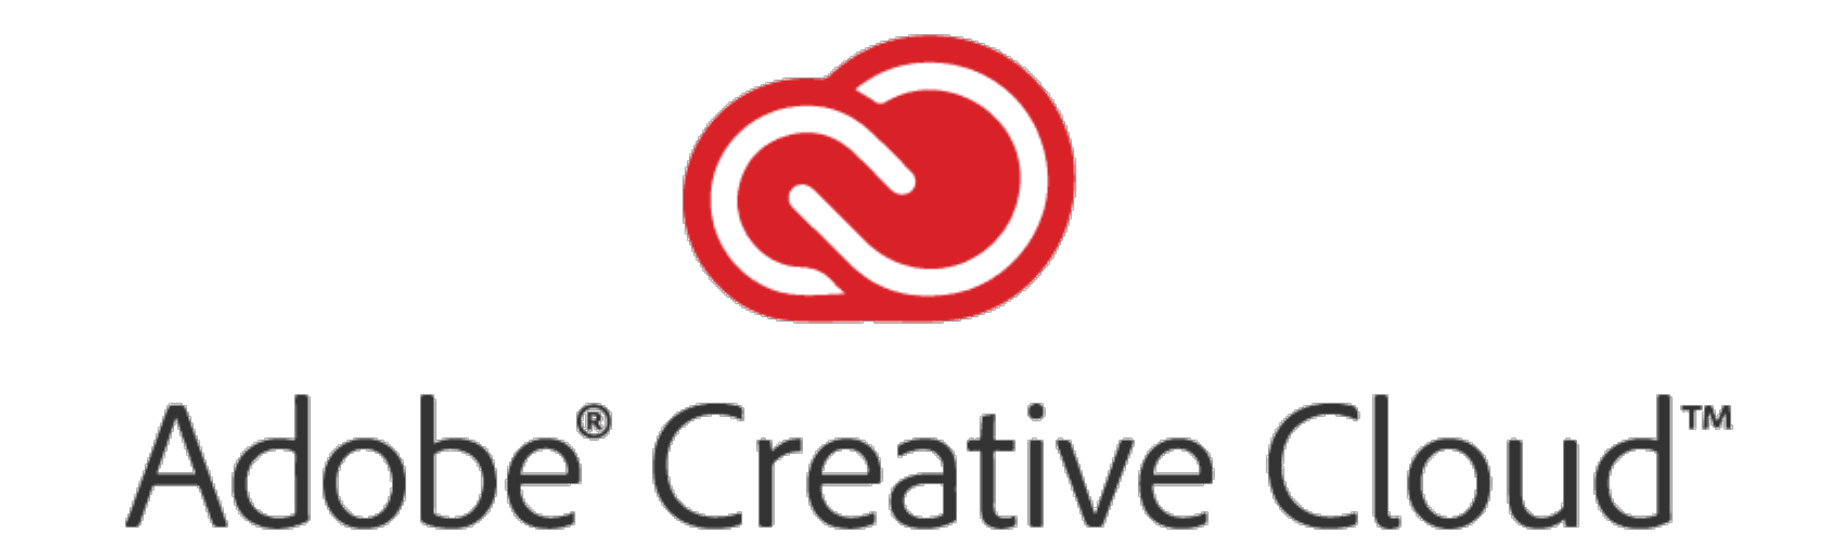 Adobe Creative Cloud Logo PNG - 175223